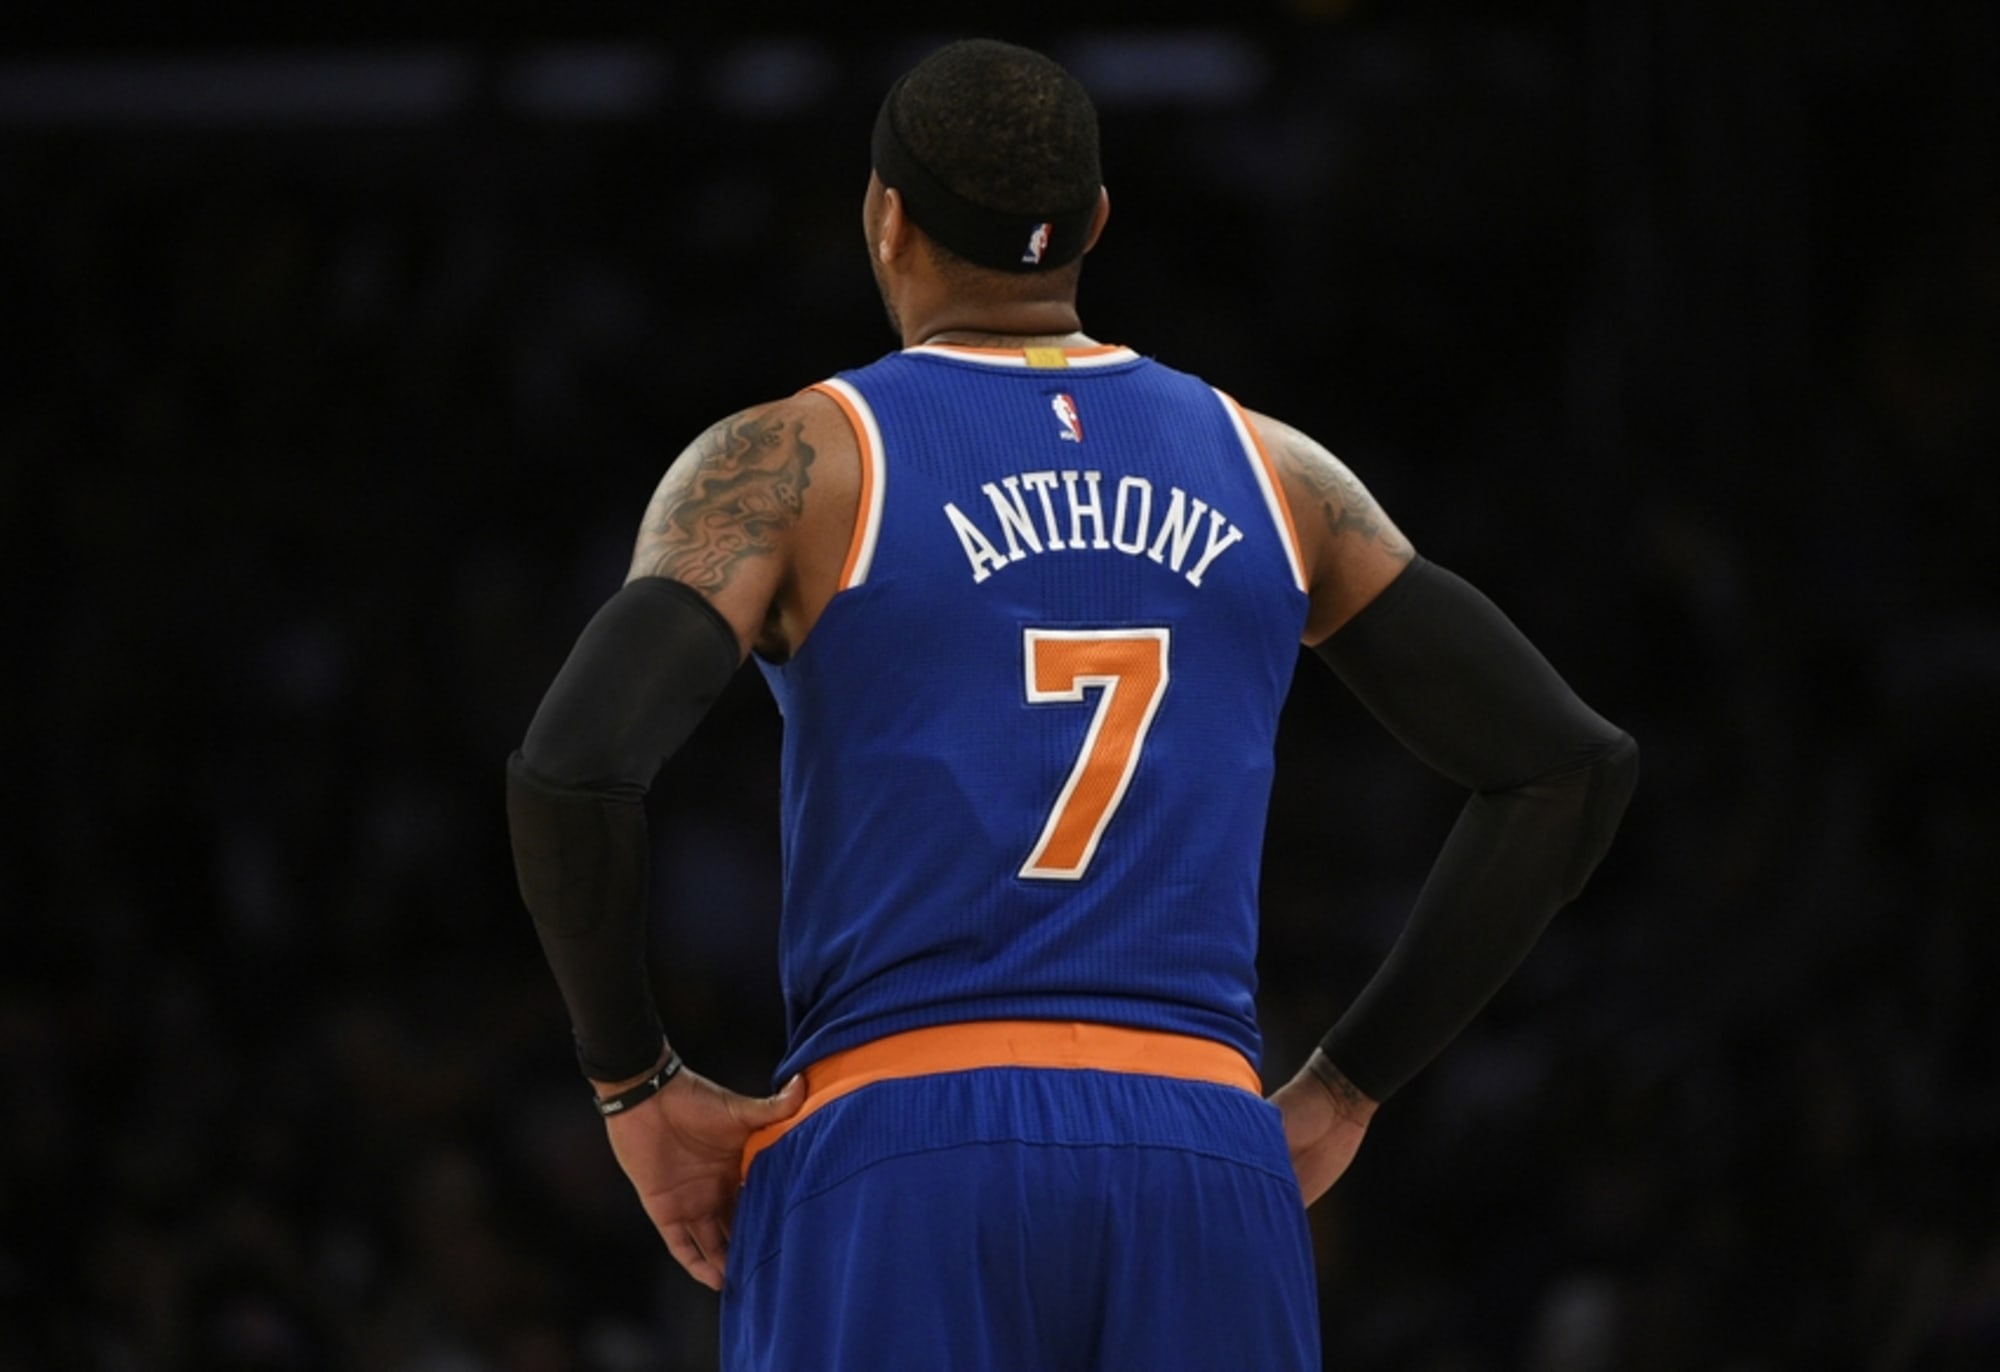 New York Knicks: Should NYK retire Carmelo Anthony's jersey?